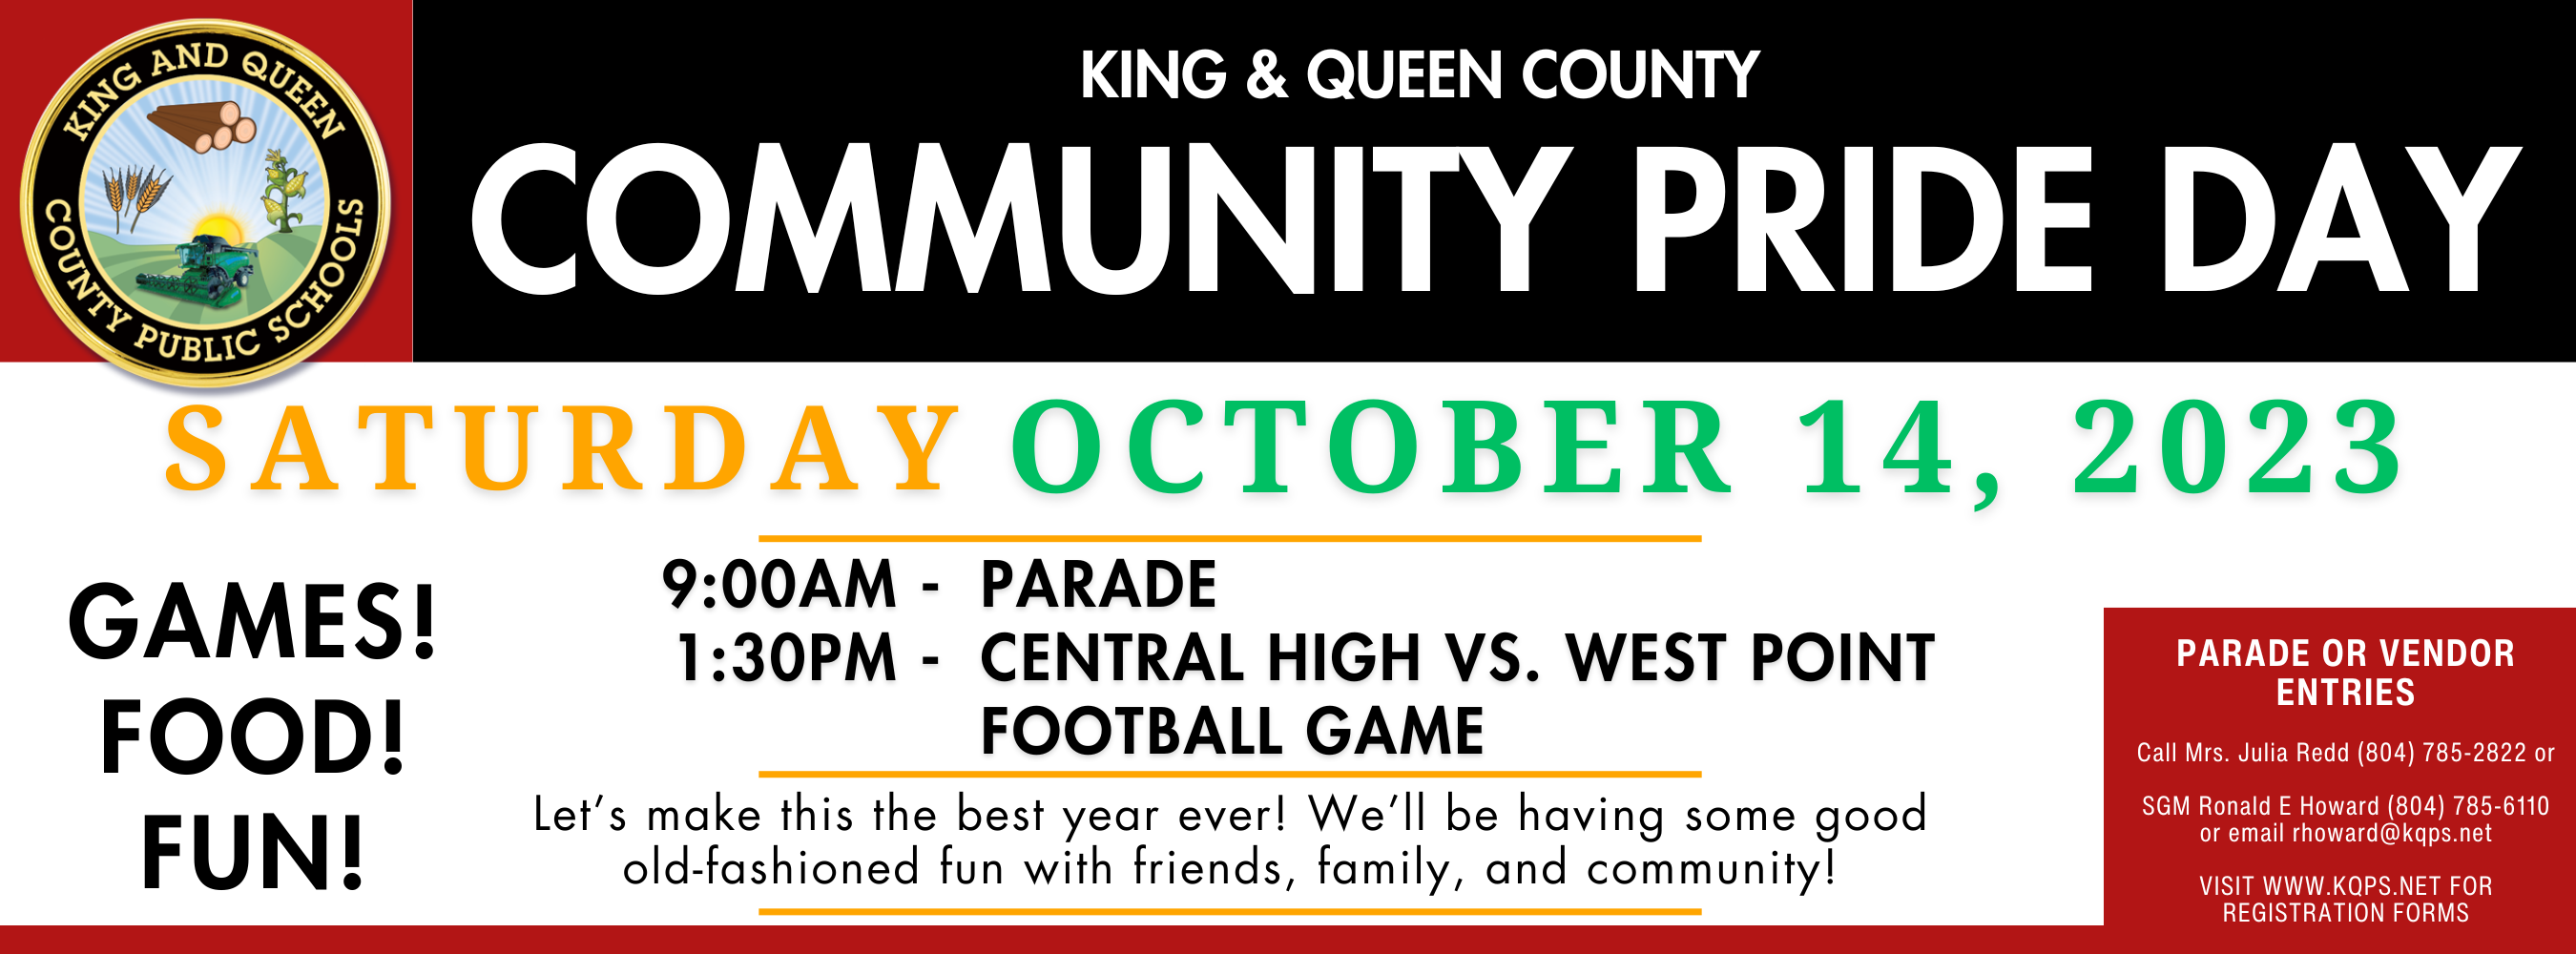 community pride day banner 2023